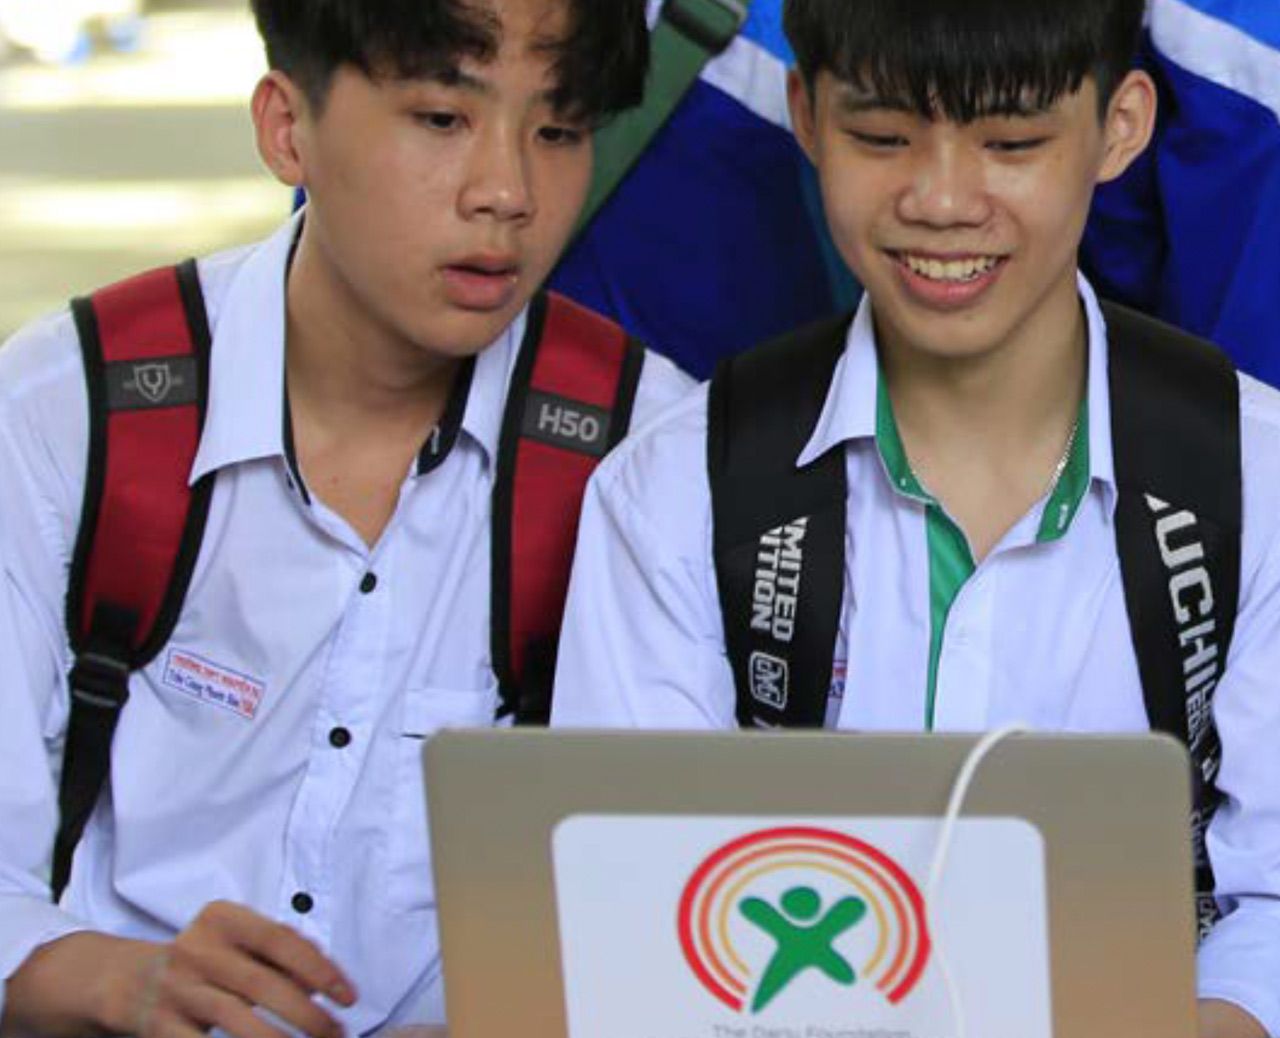 Two boys looking at a the laptop - Digital Literacy - Dariu Foundation